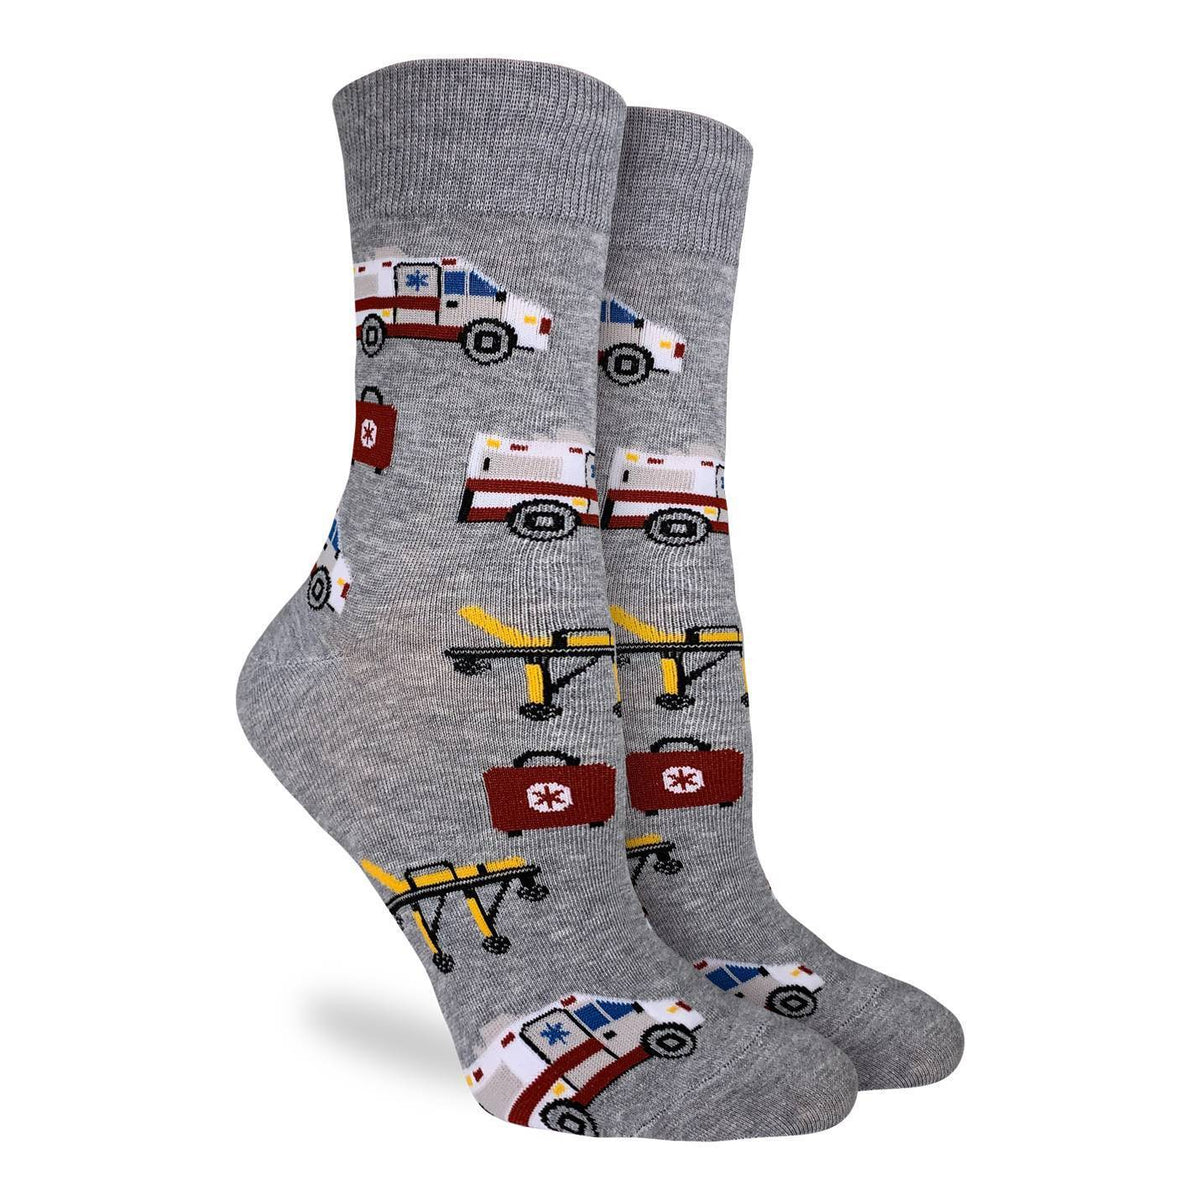 Women's Paramedic Socks – Good Luck Sock